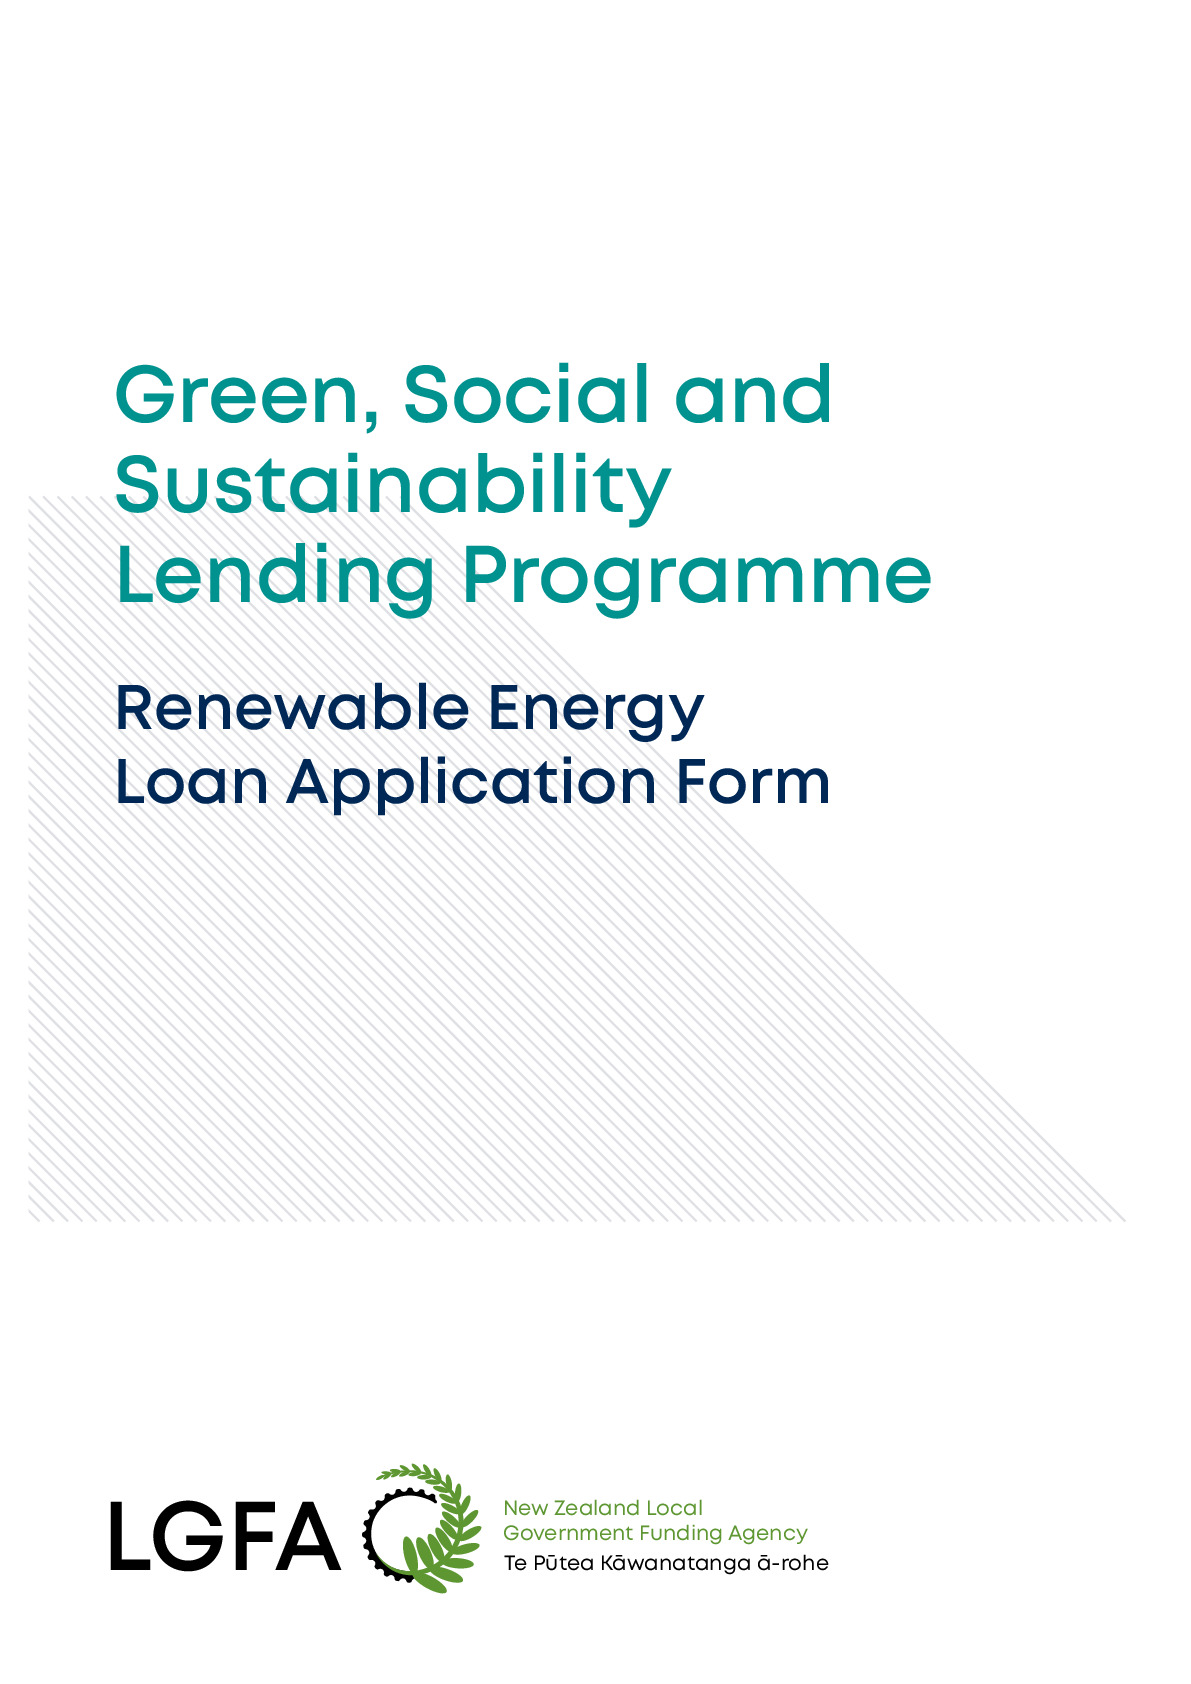 Renewable Energy Loan Application Form 30092021 FINAL